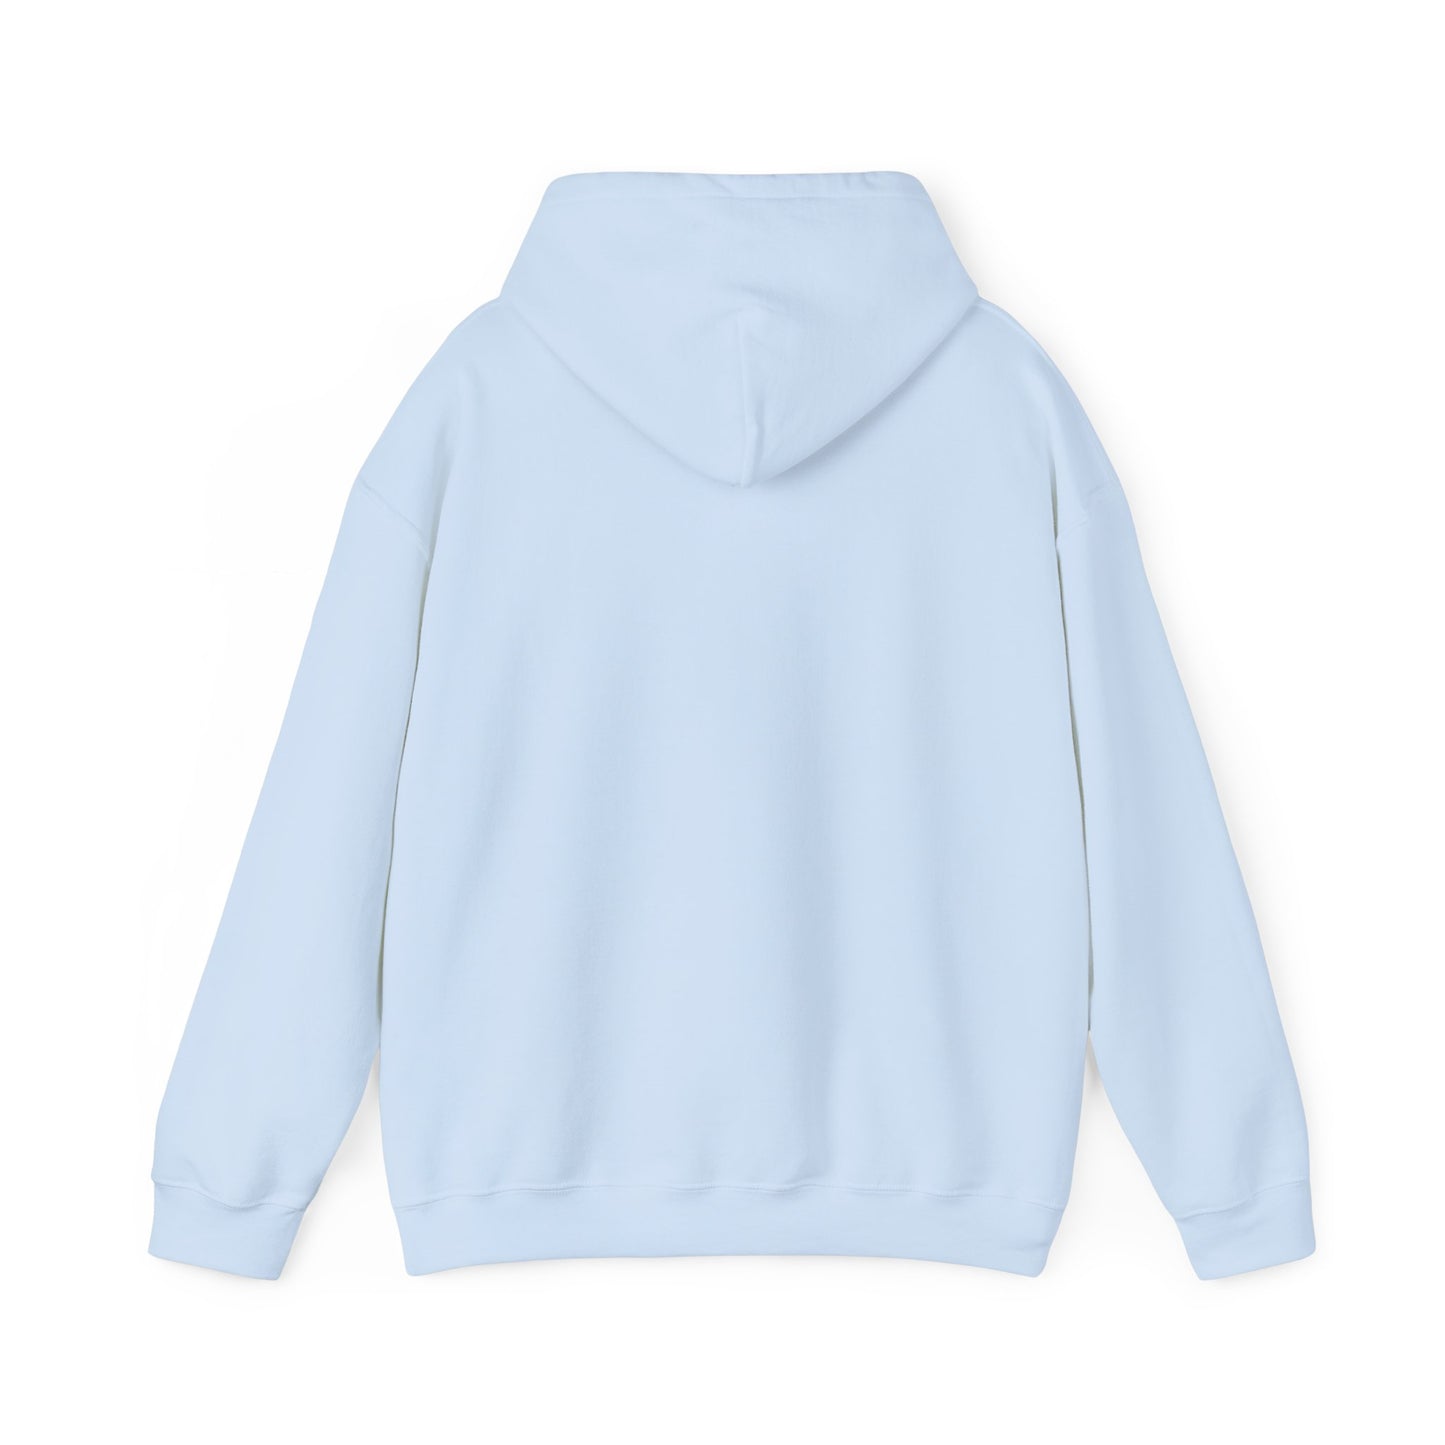 I Feel as Though Unisex Heavy Blend™ Hooded Sweatshirt